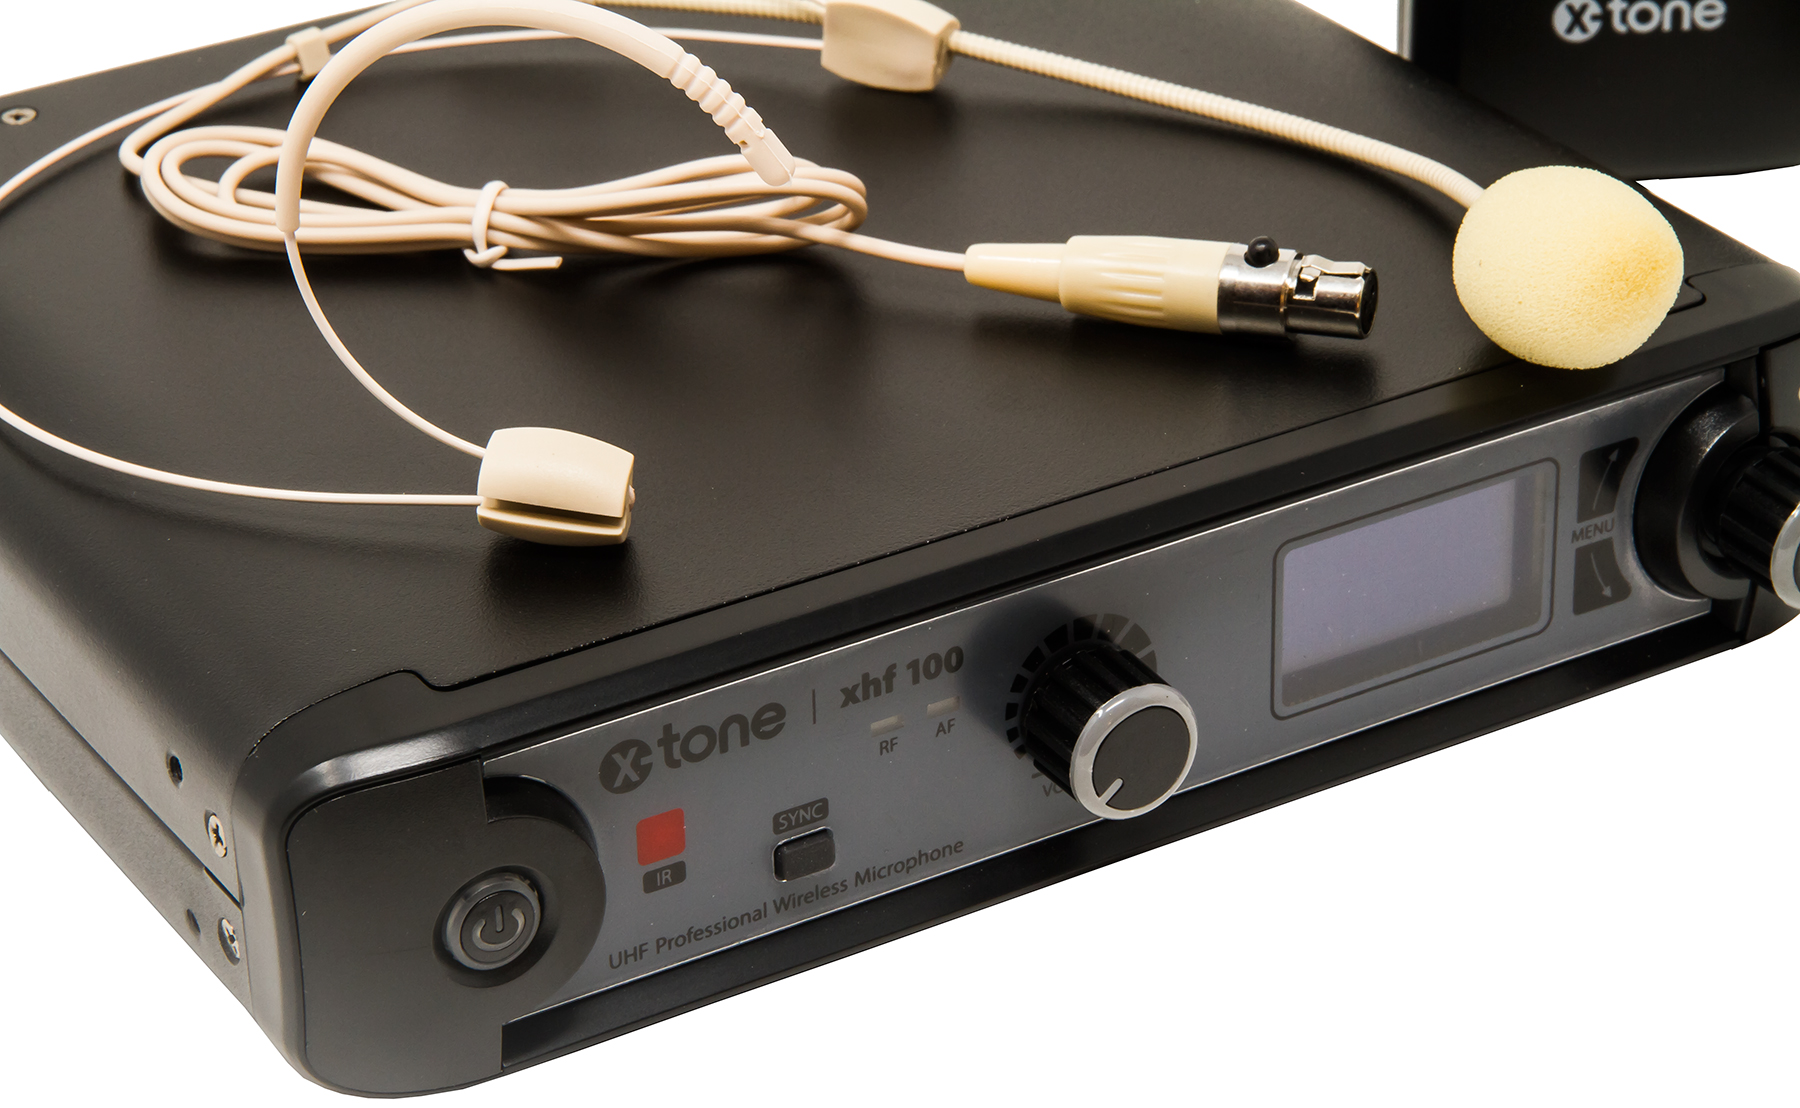 X-tone Xhf100h Systeme Hf Serre Tete Frequence Fixe - Draadloze hoofdband microfoon - Variation 1